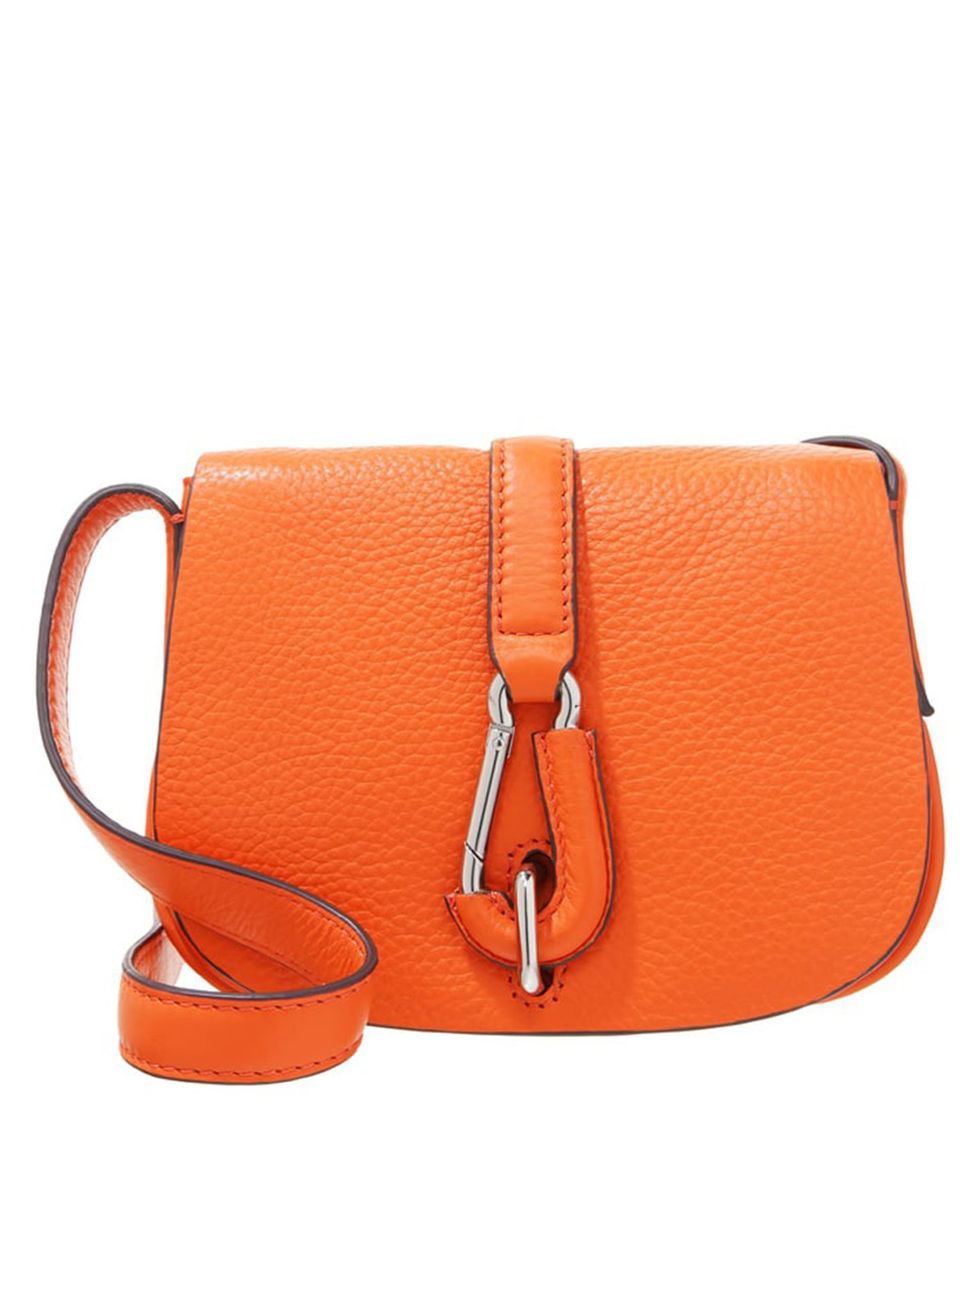 Product, Brown, Orange, Bag, Amber, Tan, Shoulder bag, Luggage and bags, Leather, Beige, 